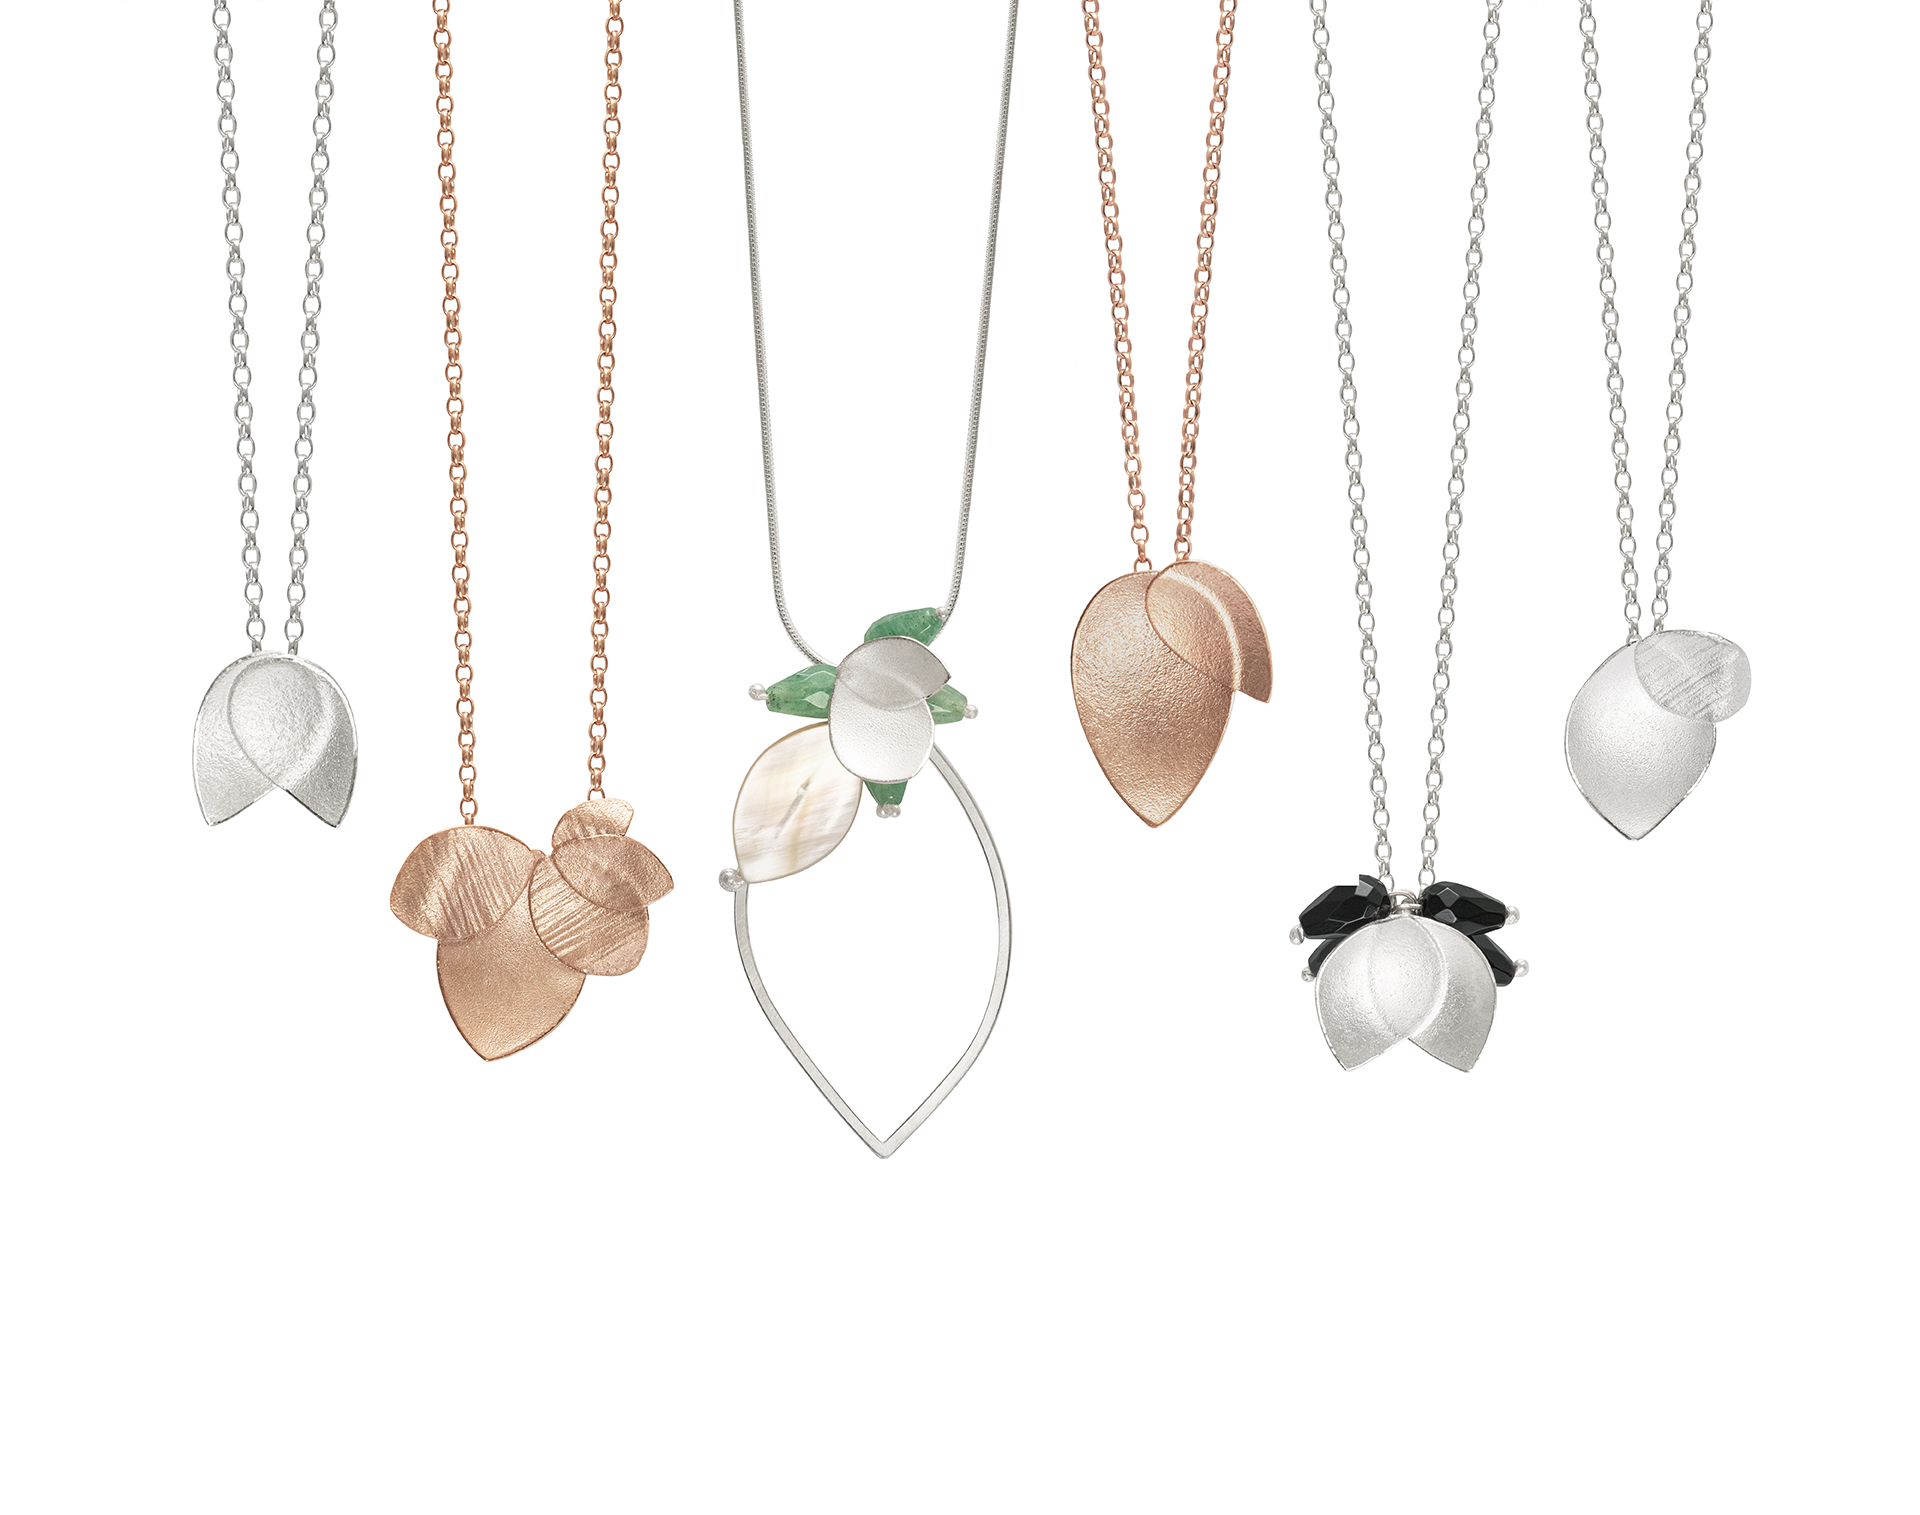 Series of 'Petal' pendants